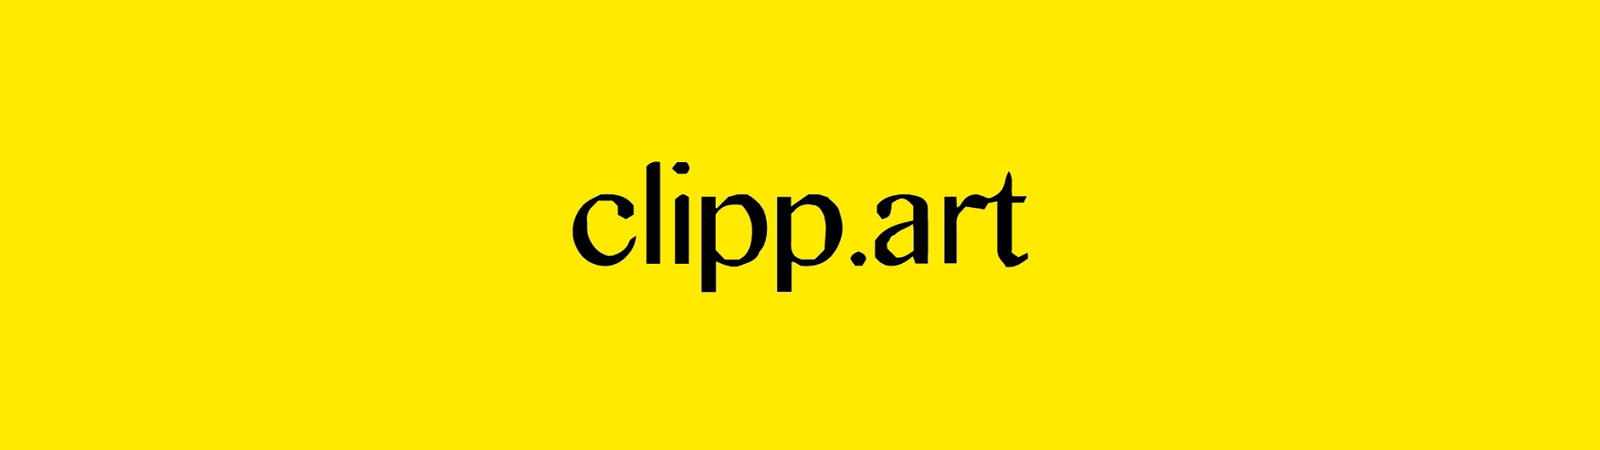 Clipp.art